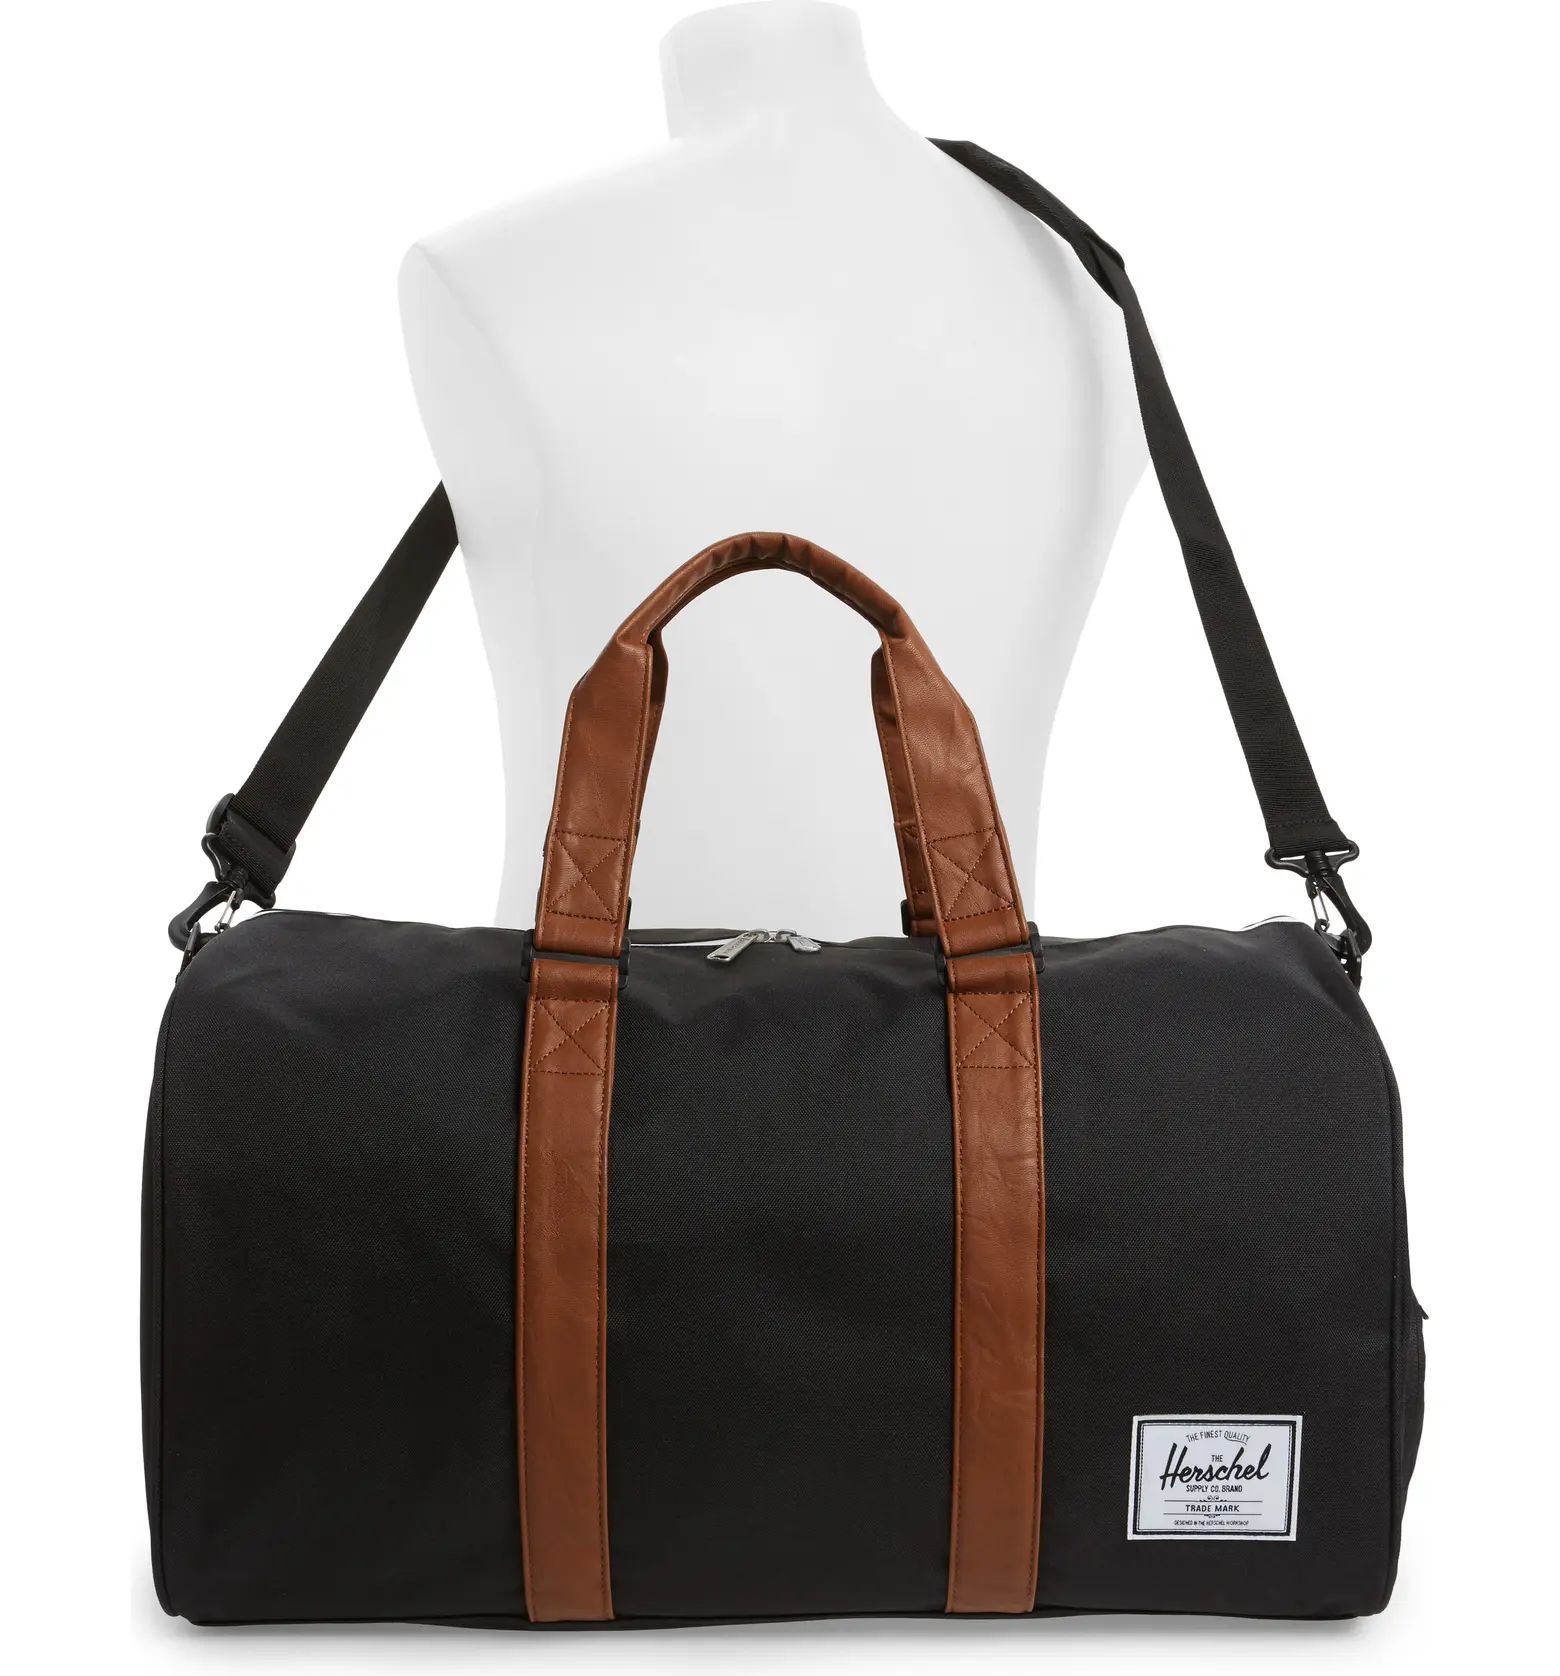 Duffle Bag | Nordstrom